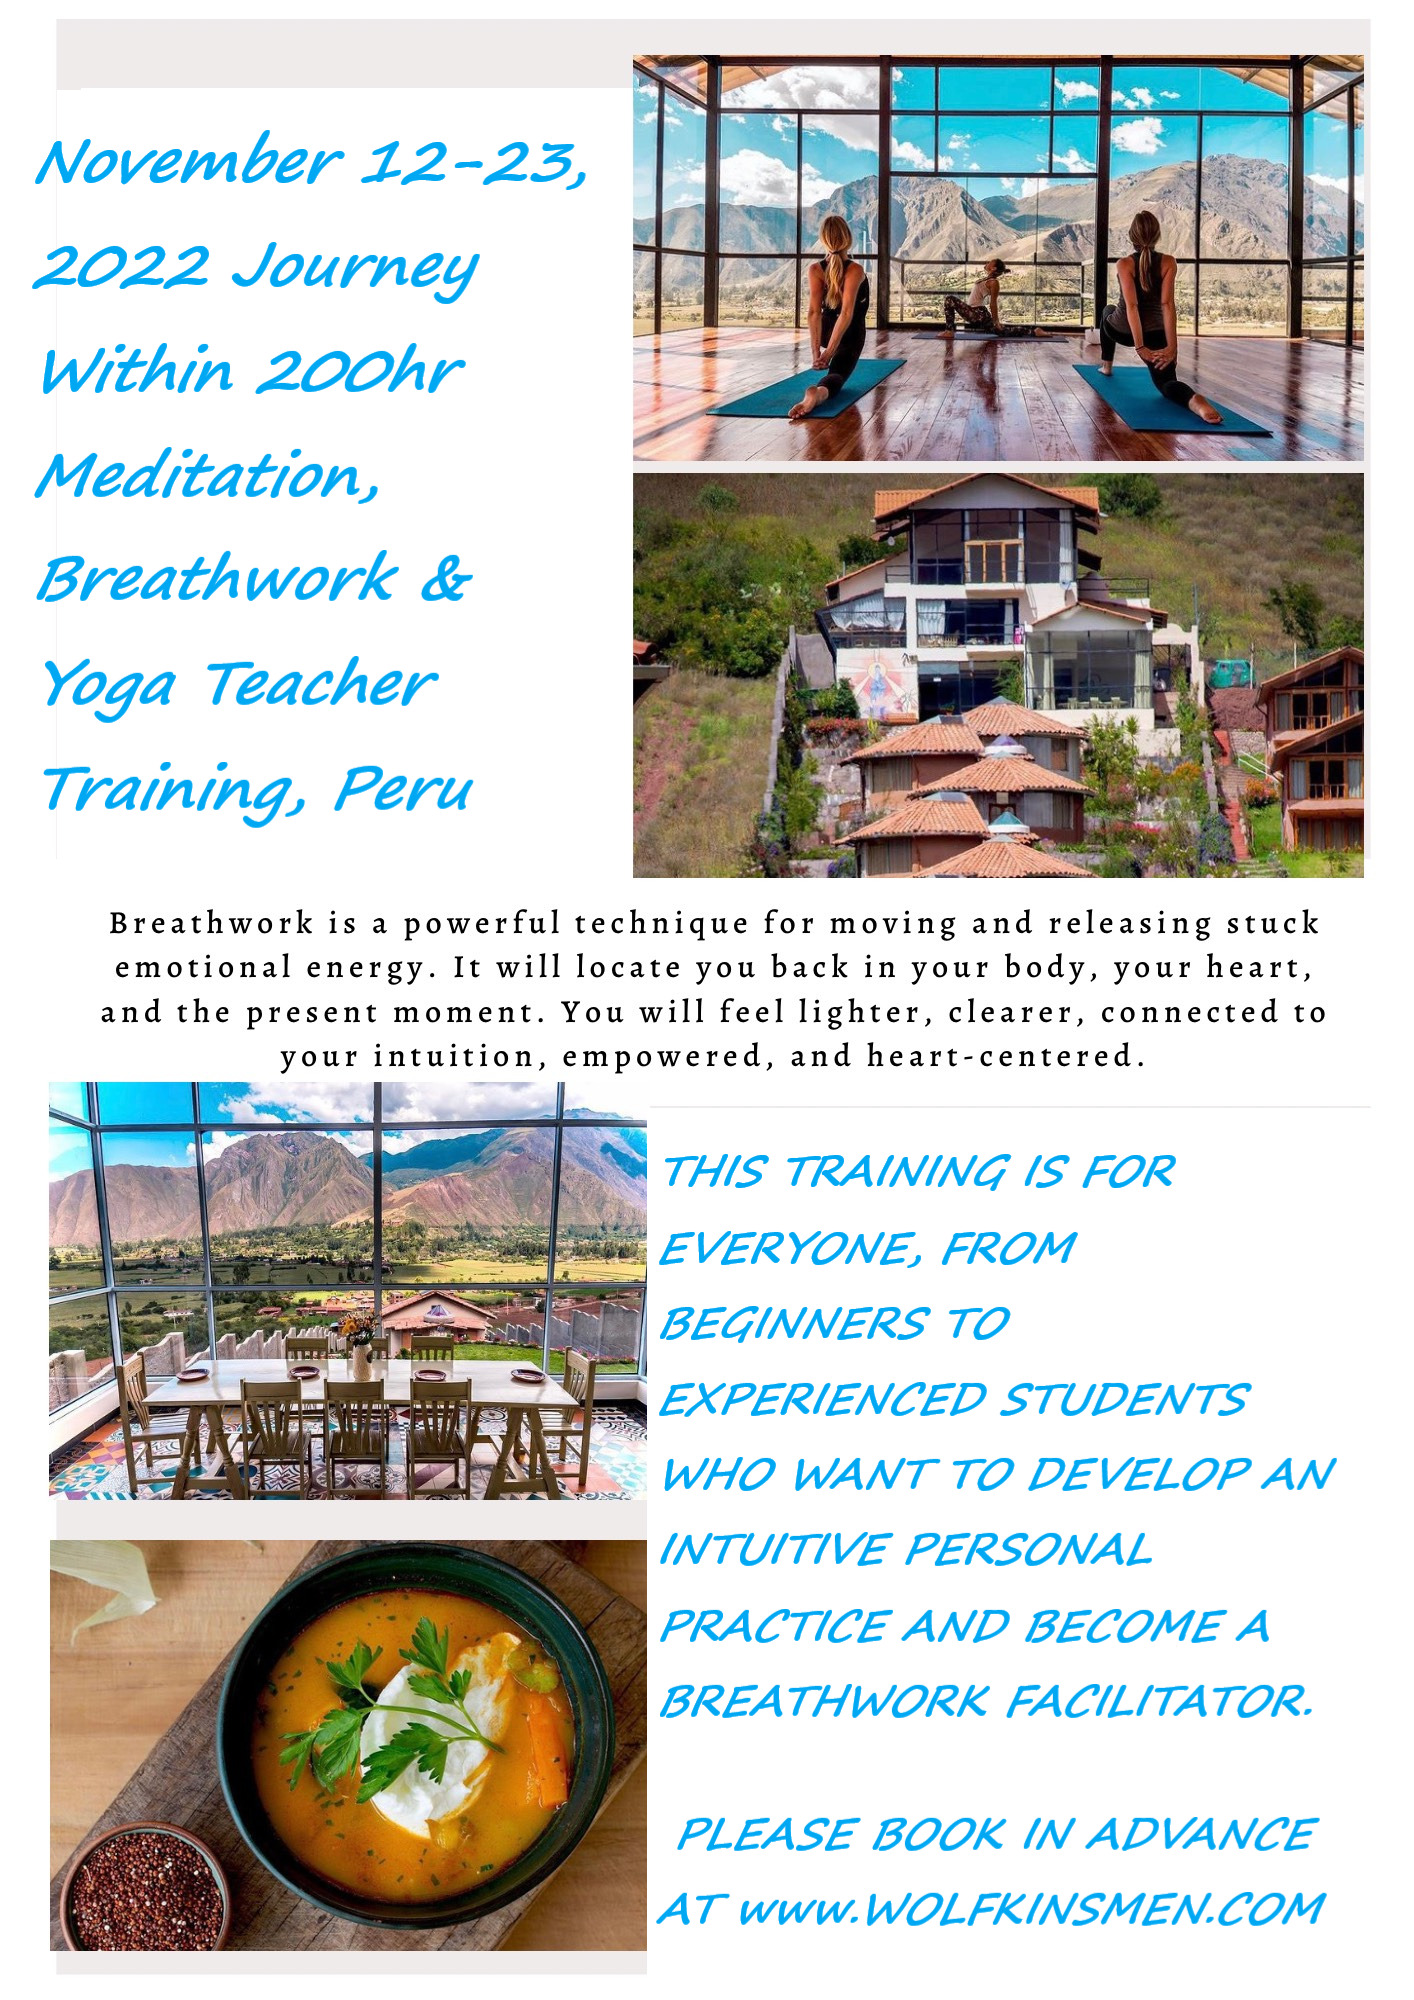 November 12-23, 2022 Journey Within 200hr Meditation, Breathwork & Yoga Teacher Training, Peru